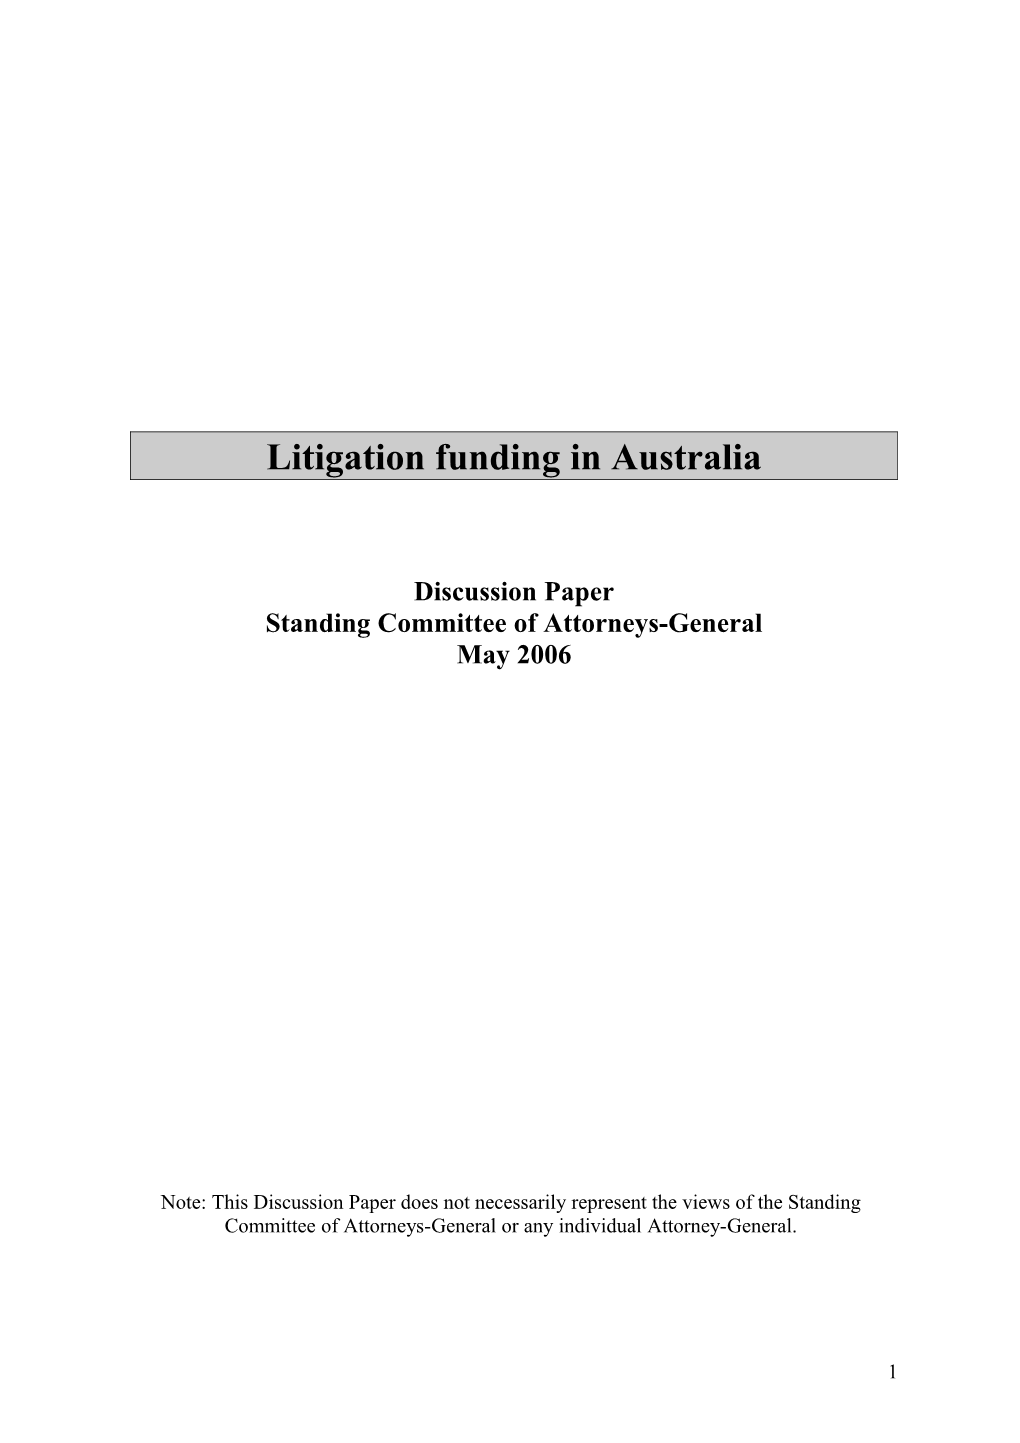 Litigation Funding in Australia